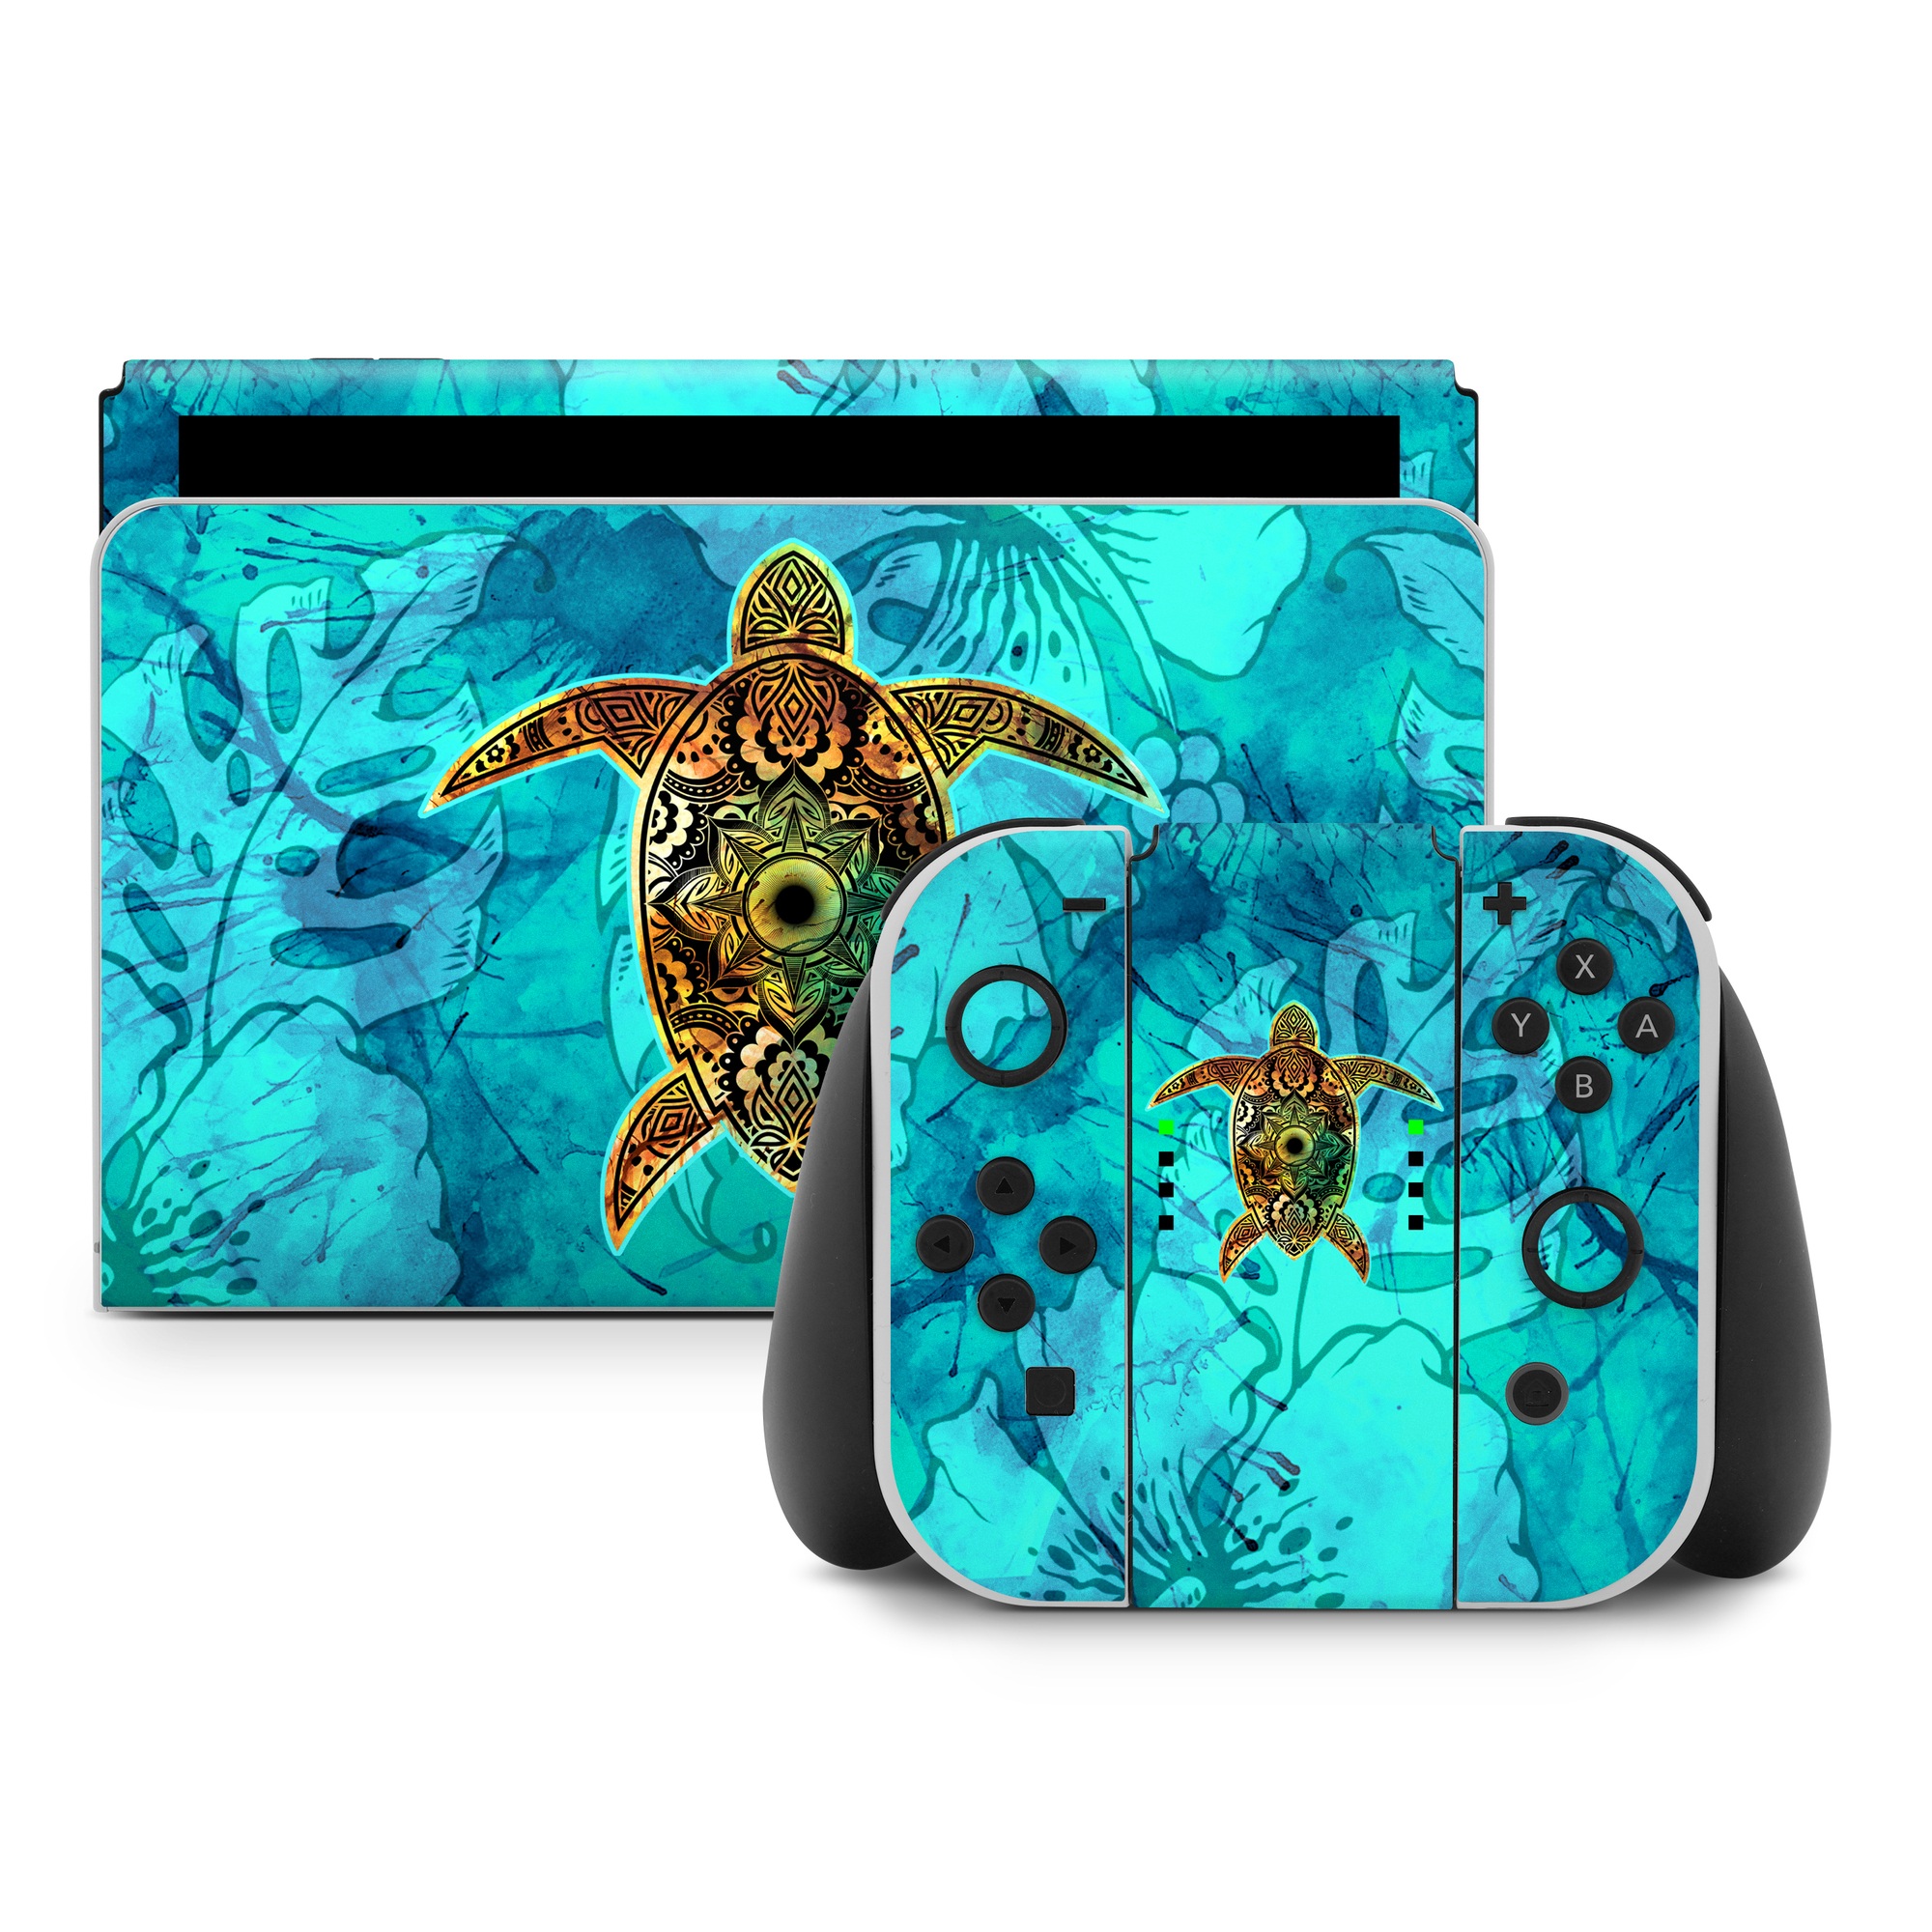 Nintendo Switch Skin - Sacred Honu (Image 1)